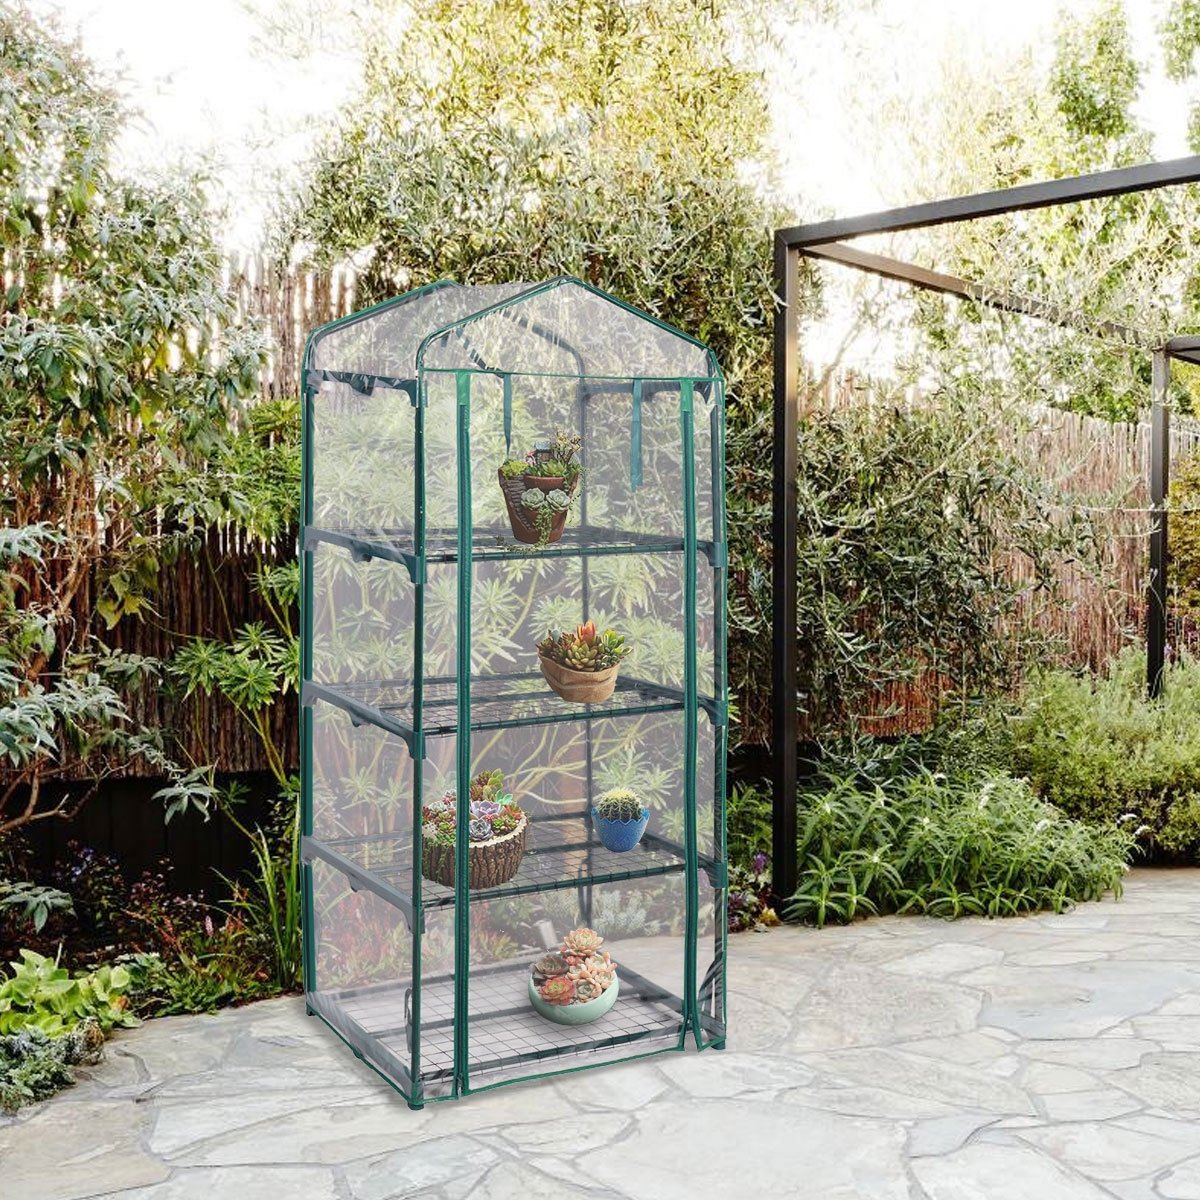 Outdoor Portable Mini 4 Shelves Greenhouse, Transparent - Gallery Canada